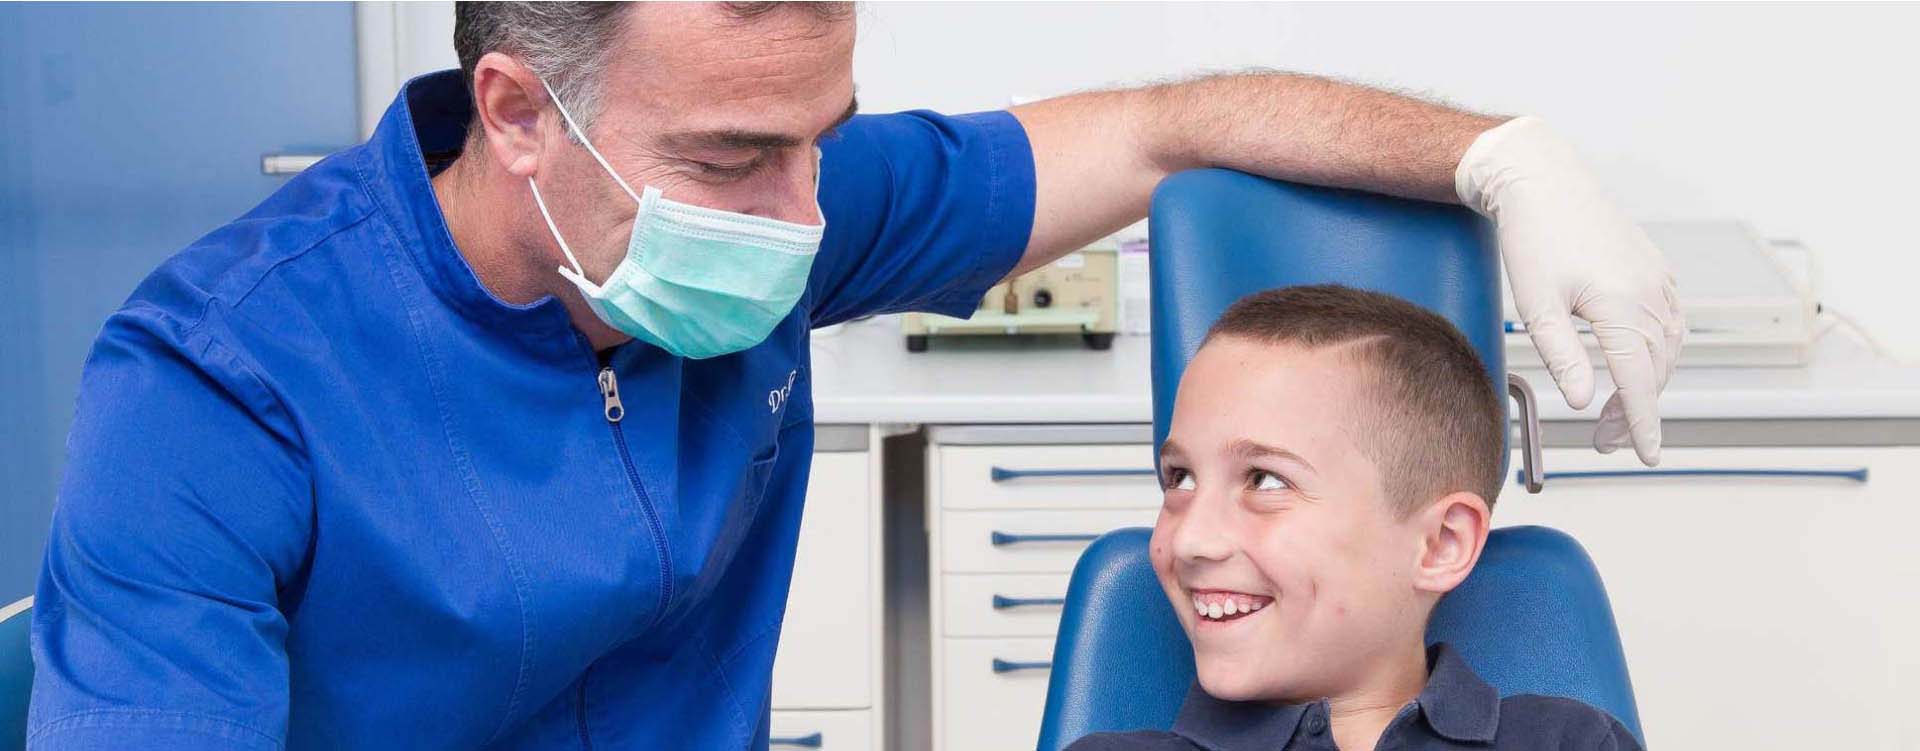 Dentista a Benevento Studio Dentistico Apos Dott.Gennaro Sapio Dott.Ettore Sapio Via Avellola